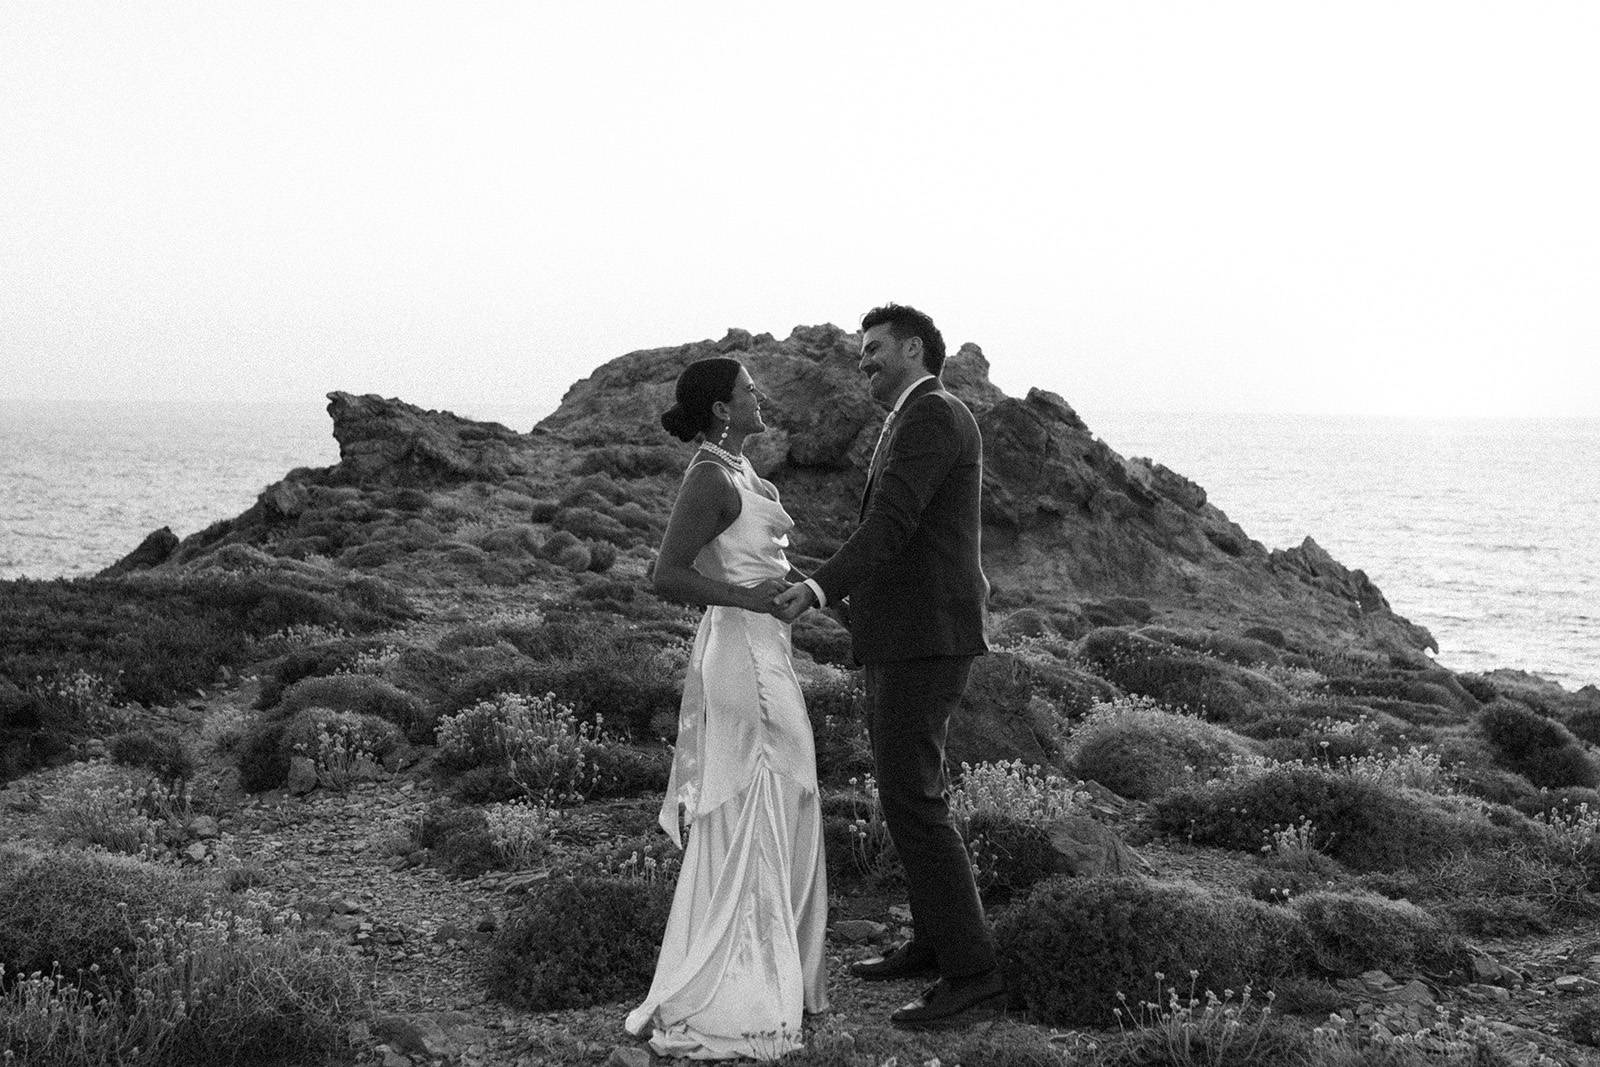 Bride and groom, admiring the sea